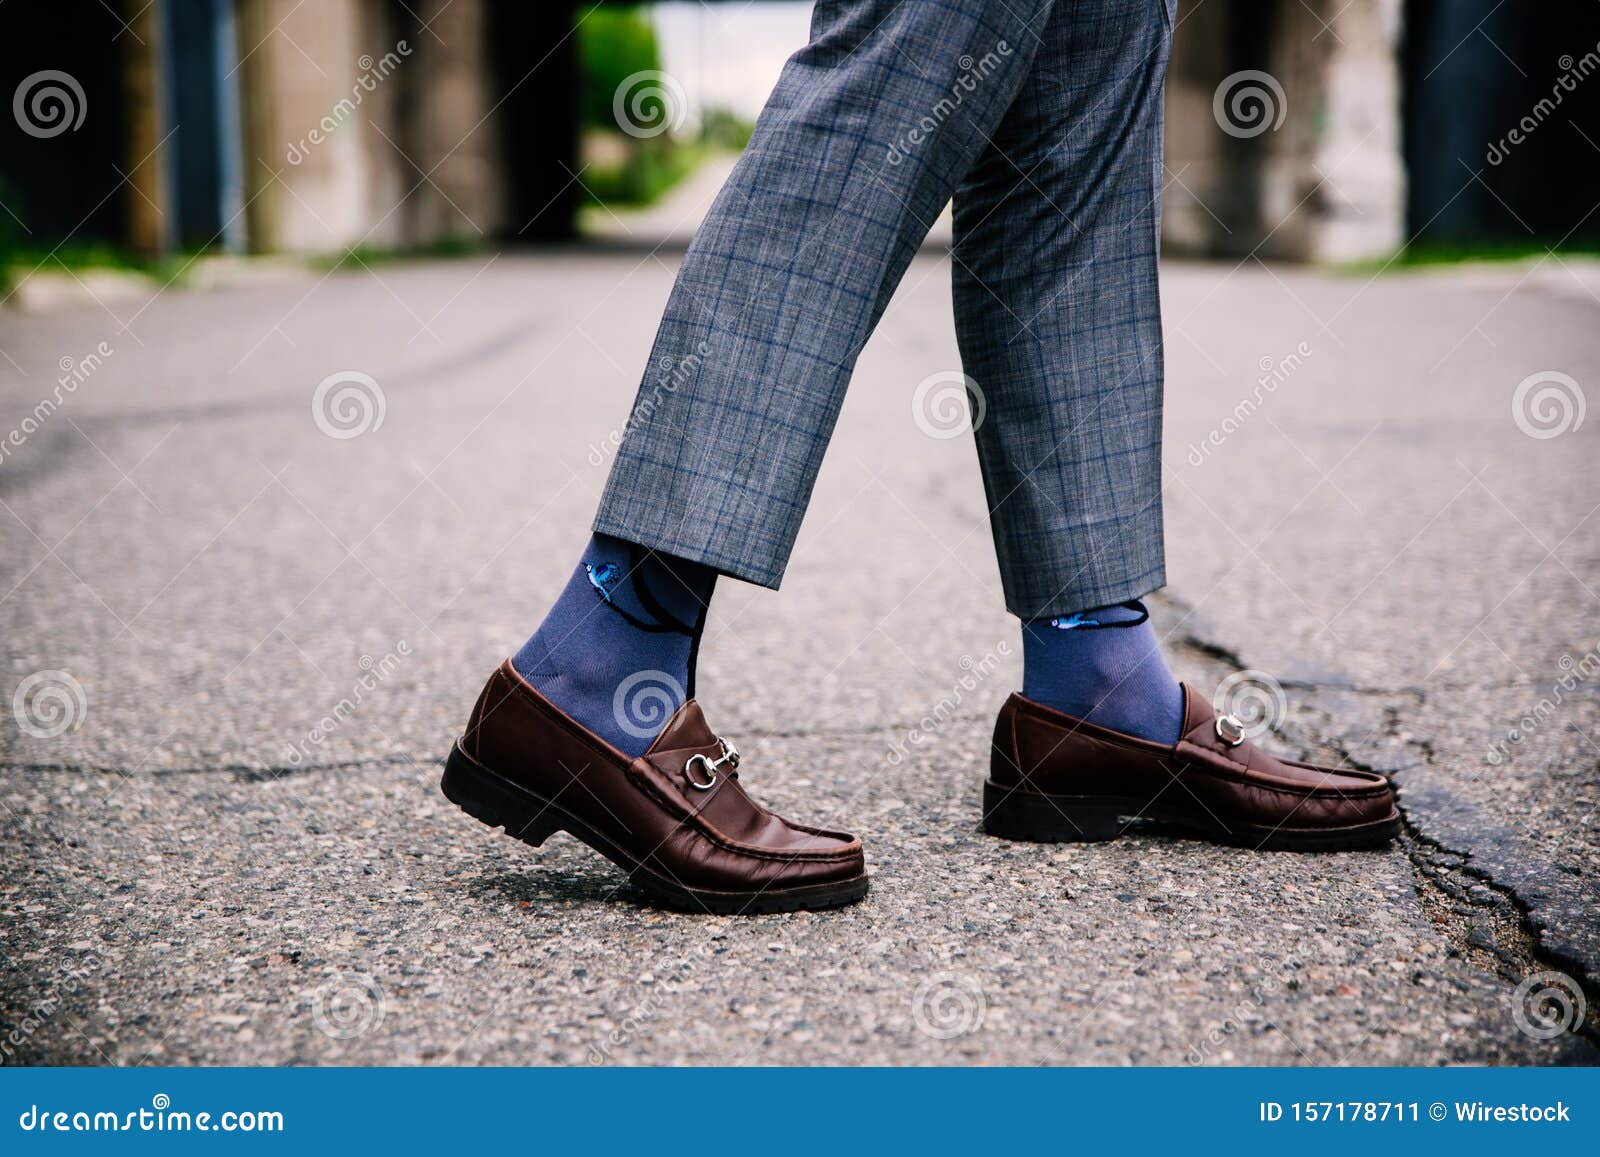 10 Brown Shirt Blue Pants Brown Belt Looking Forward Images Stock Photos   Vectors  Shutterstock